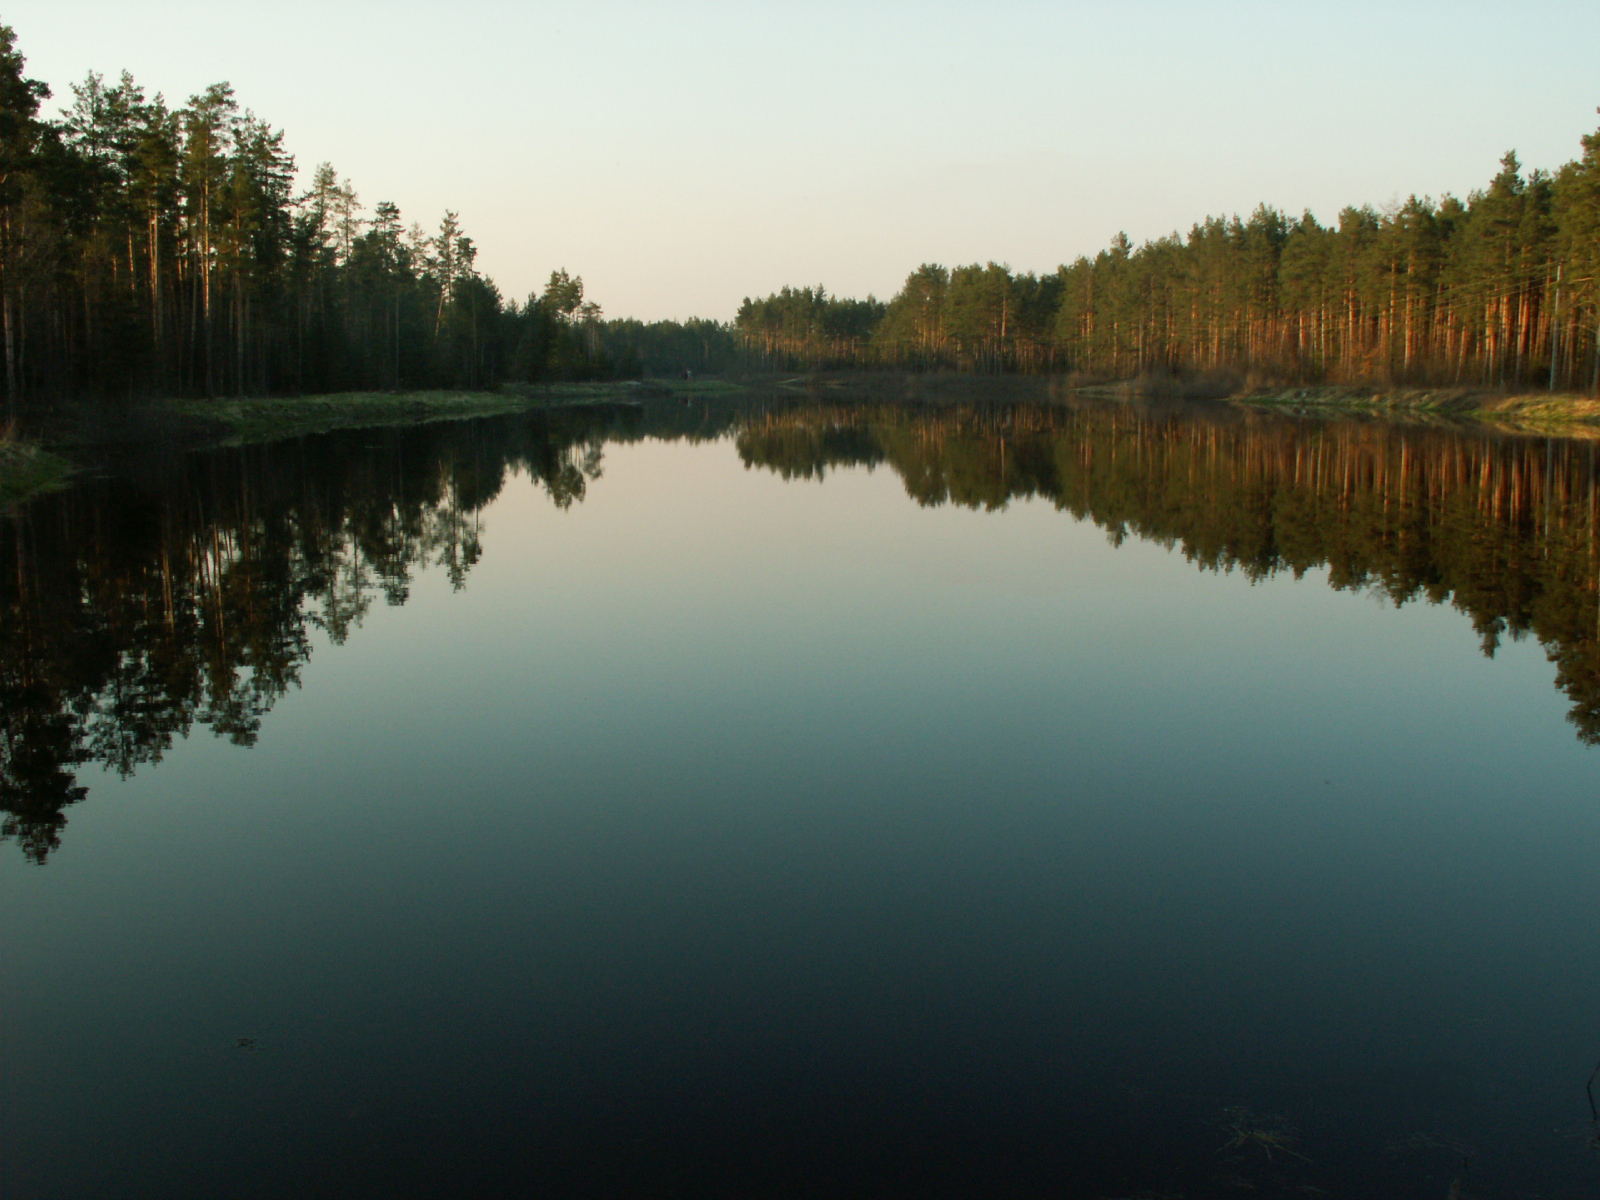 File:Szum-river-dam-Solska-Poland.jpg - Wikimedia Commons